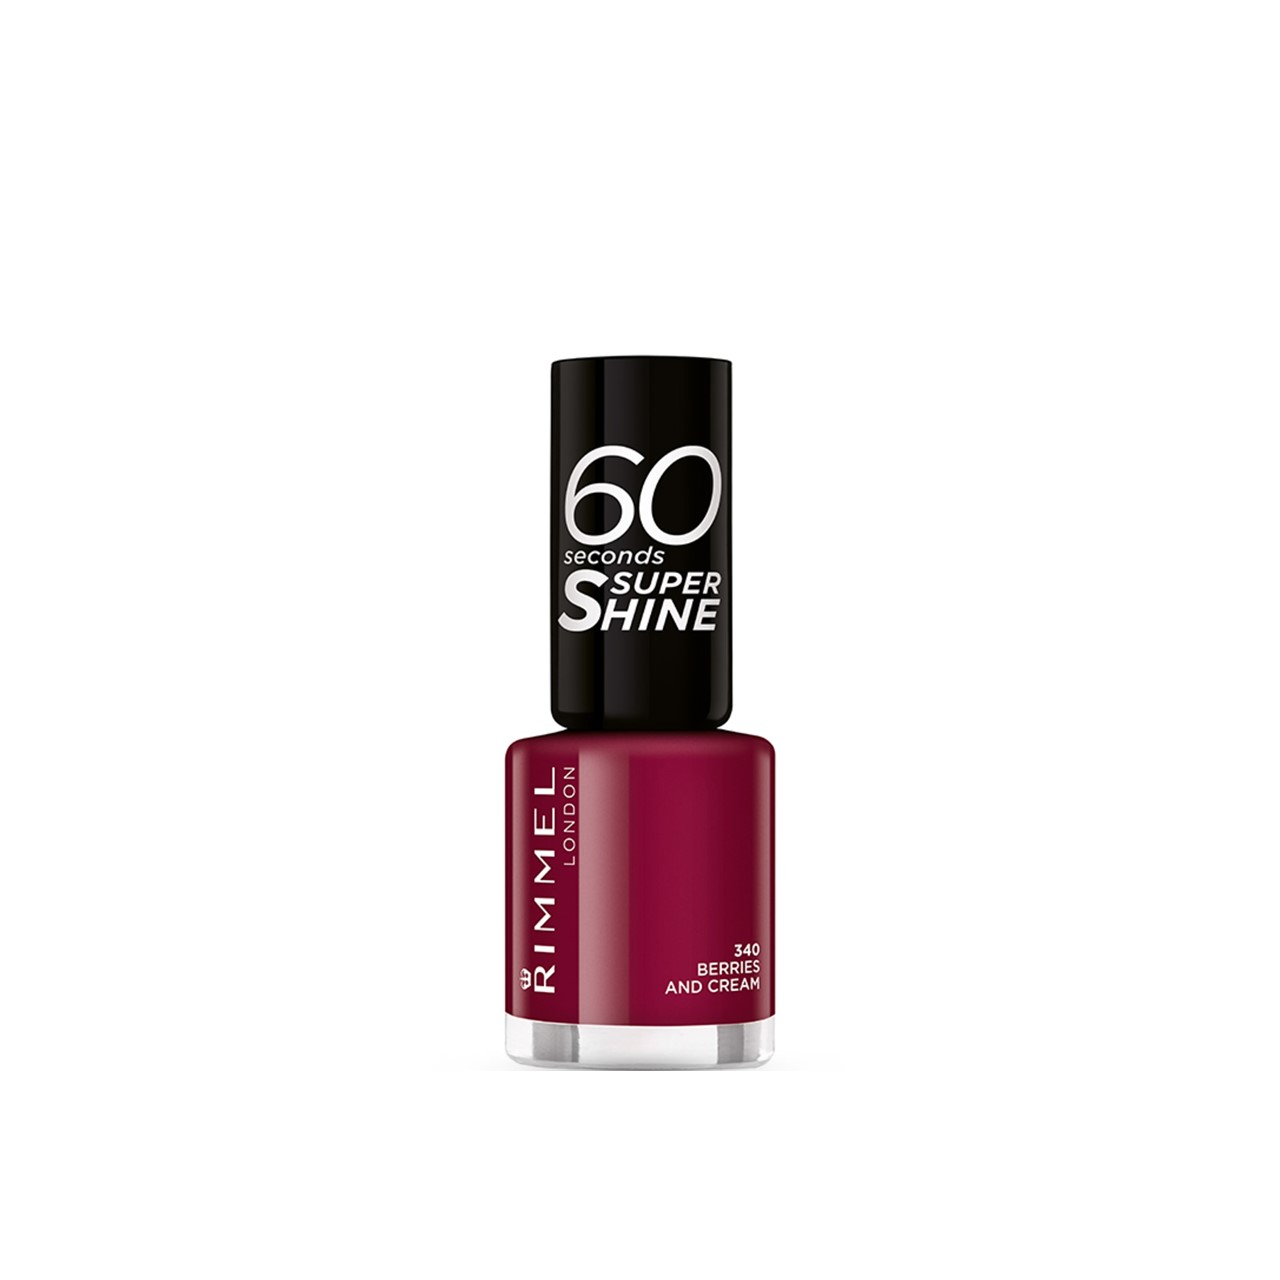 Rimmel London 60 Seconds Super Shine Nail Polish 340 8ml (0.27fl oz)